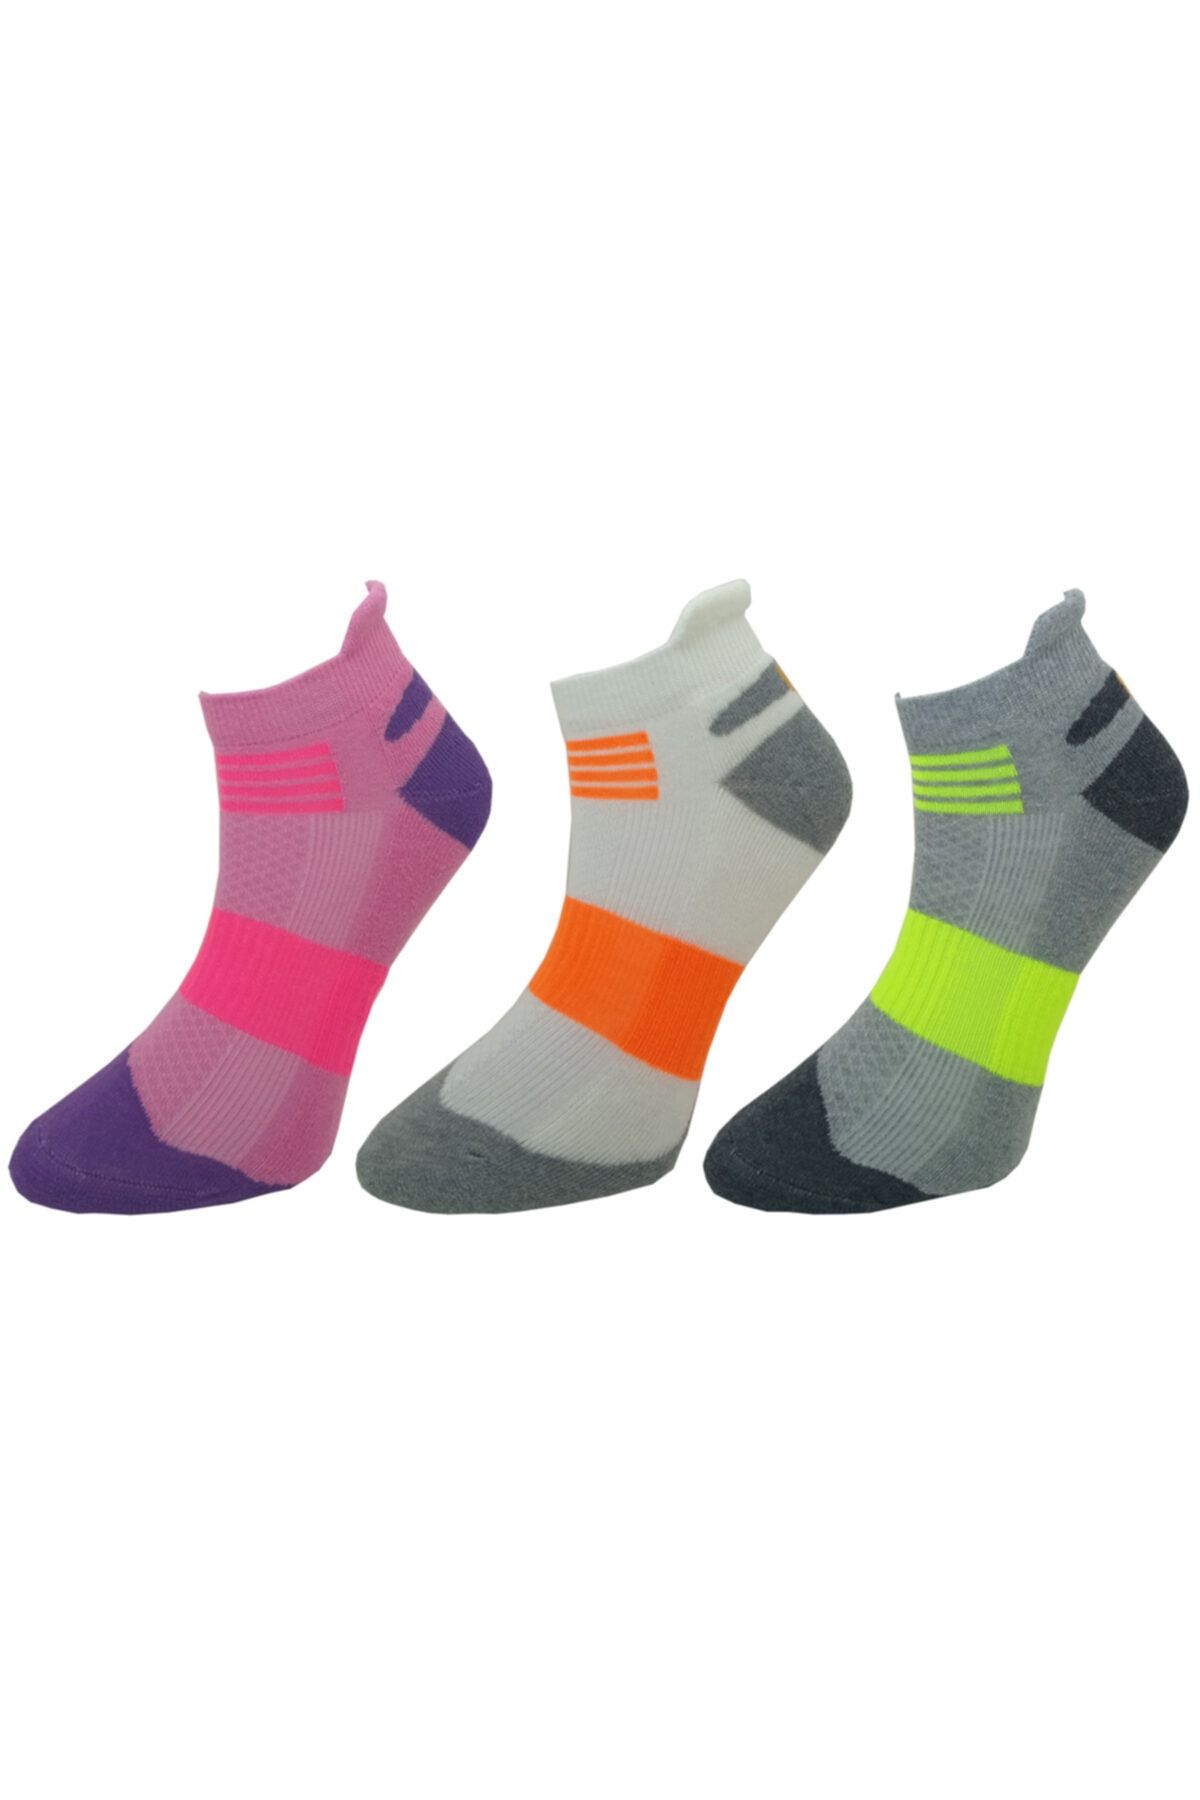 Mugan Kadın Renkli Spor Patik Çorap 3 Çift